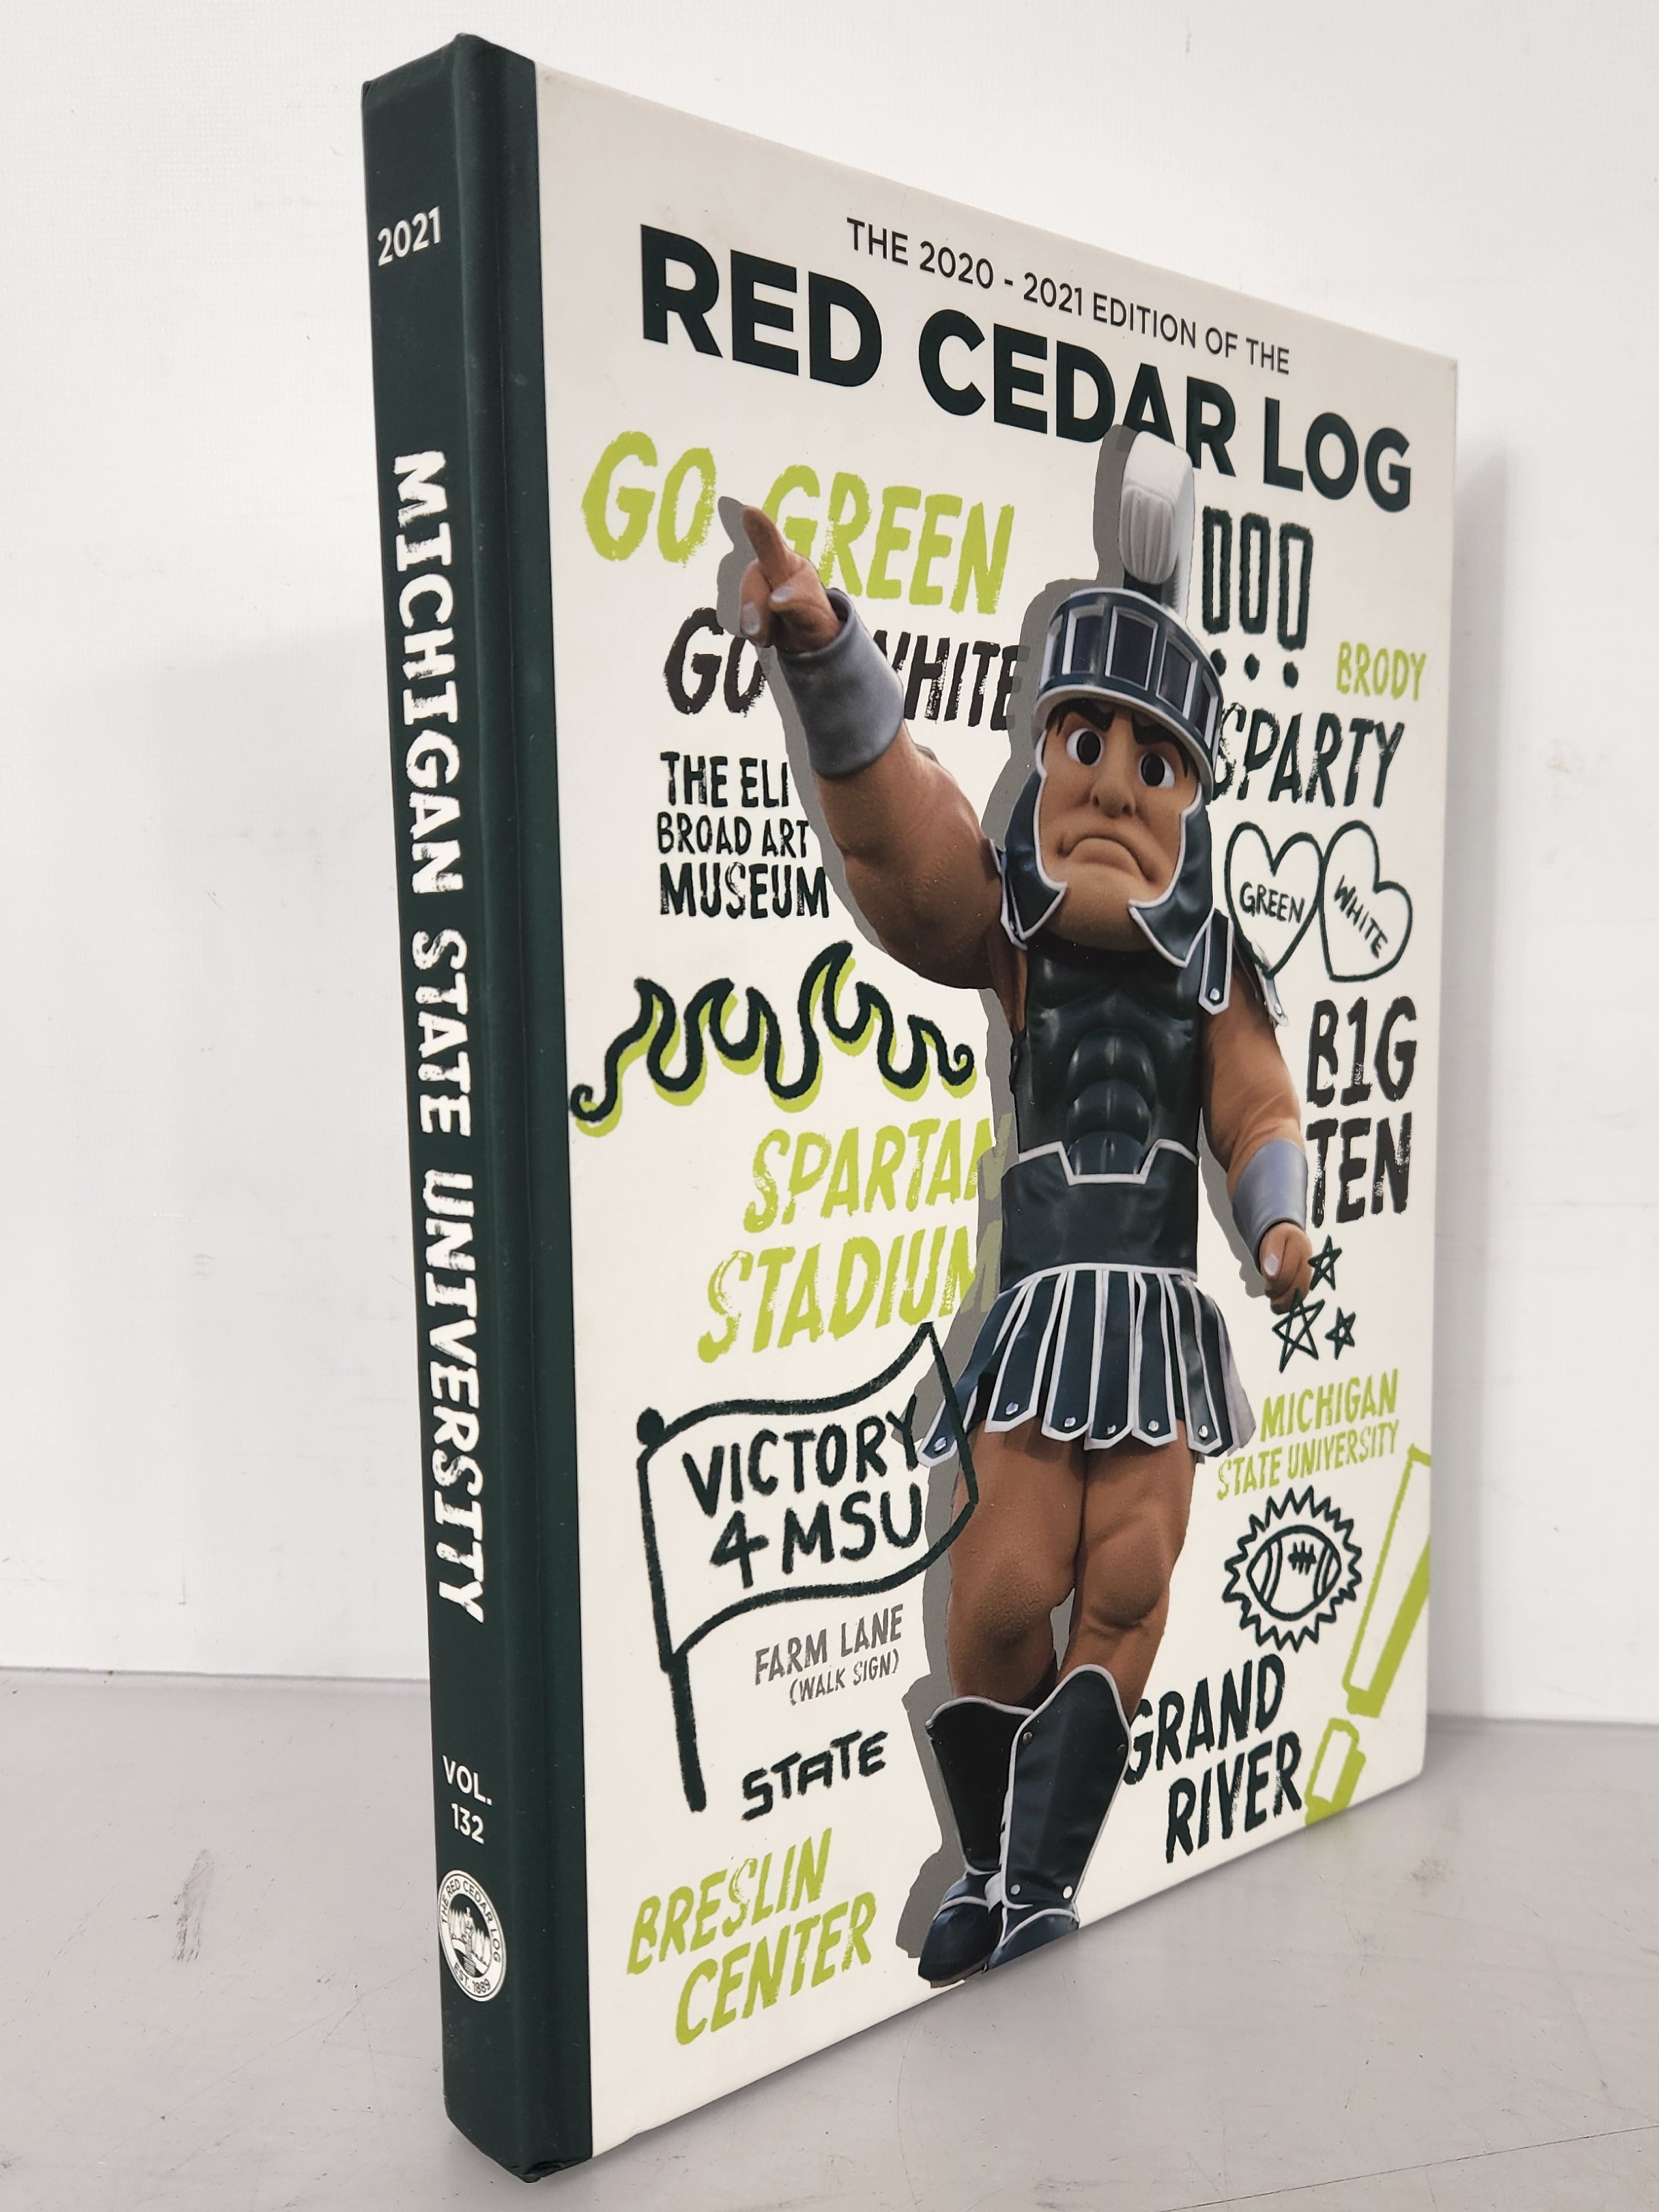 2021 Michigan State University Yearbook Red Cedar Log